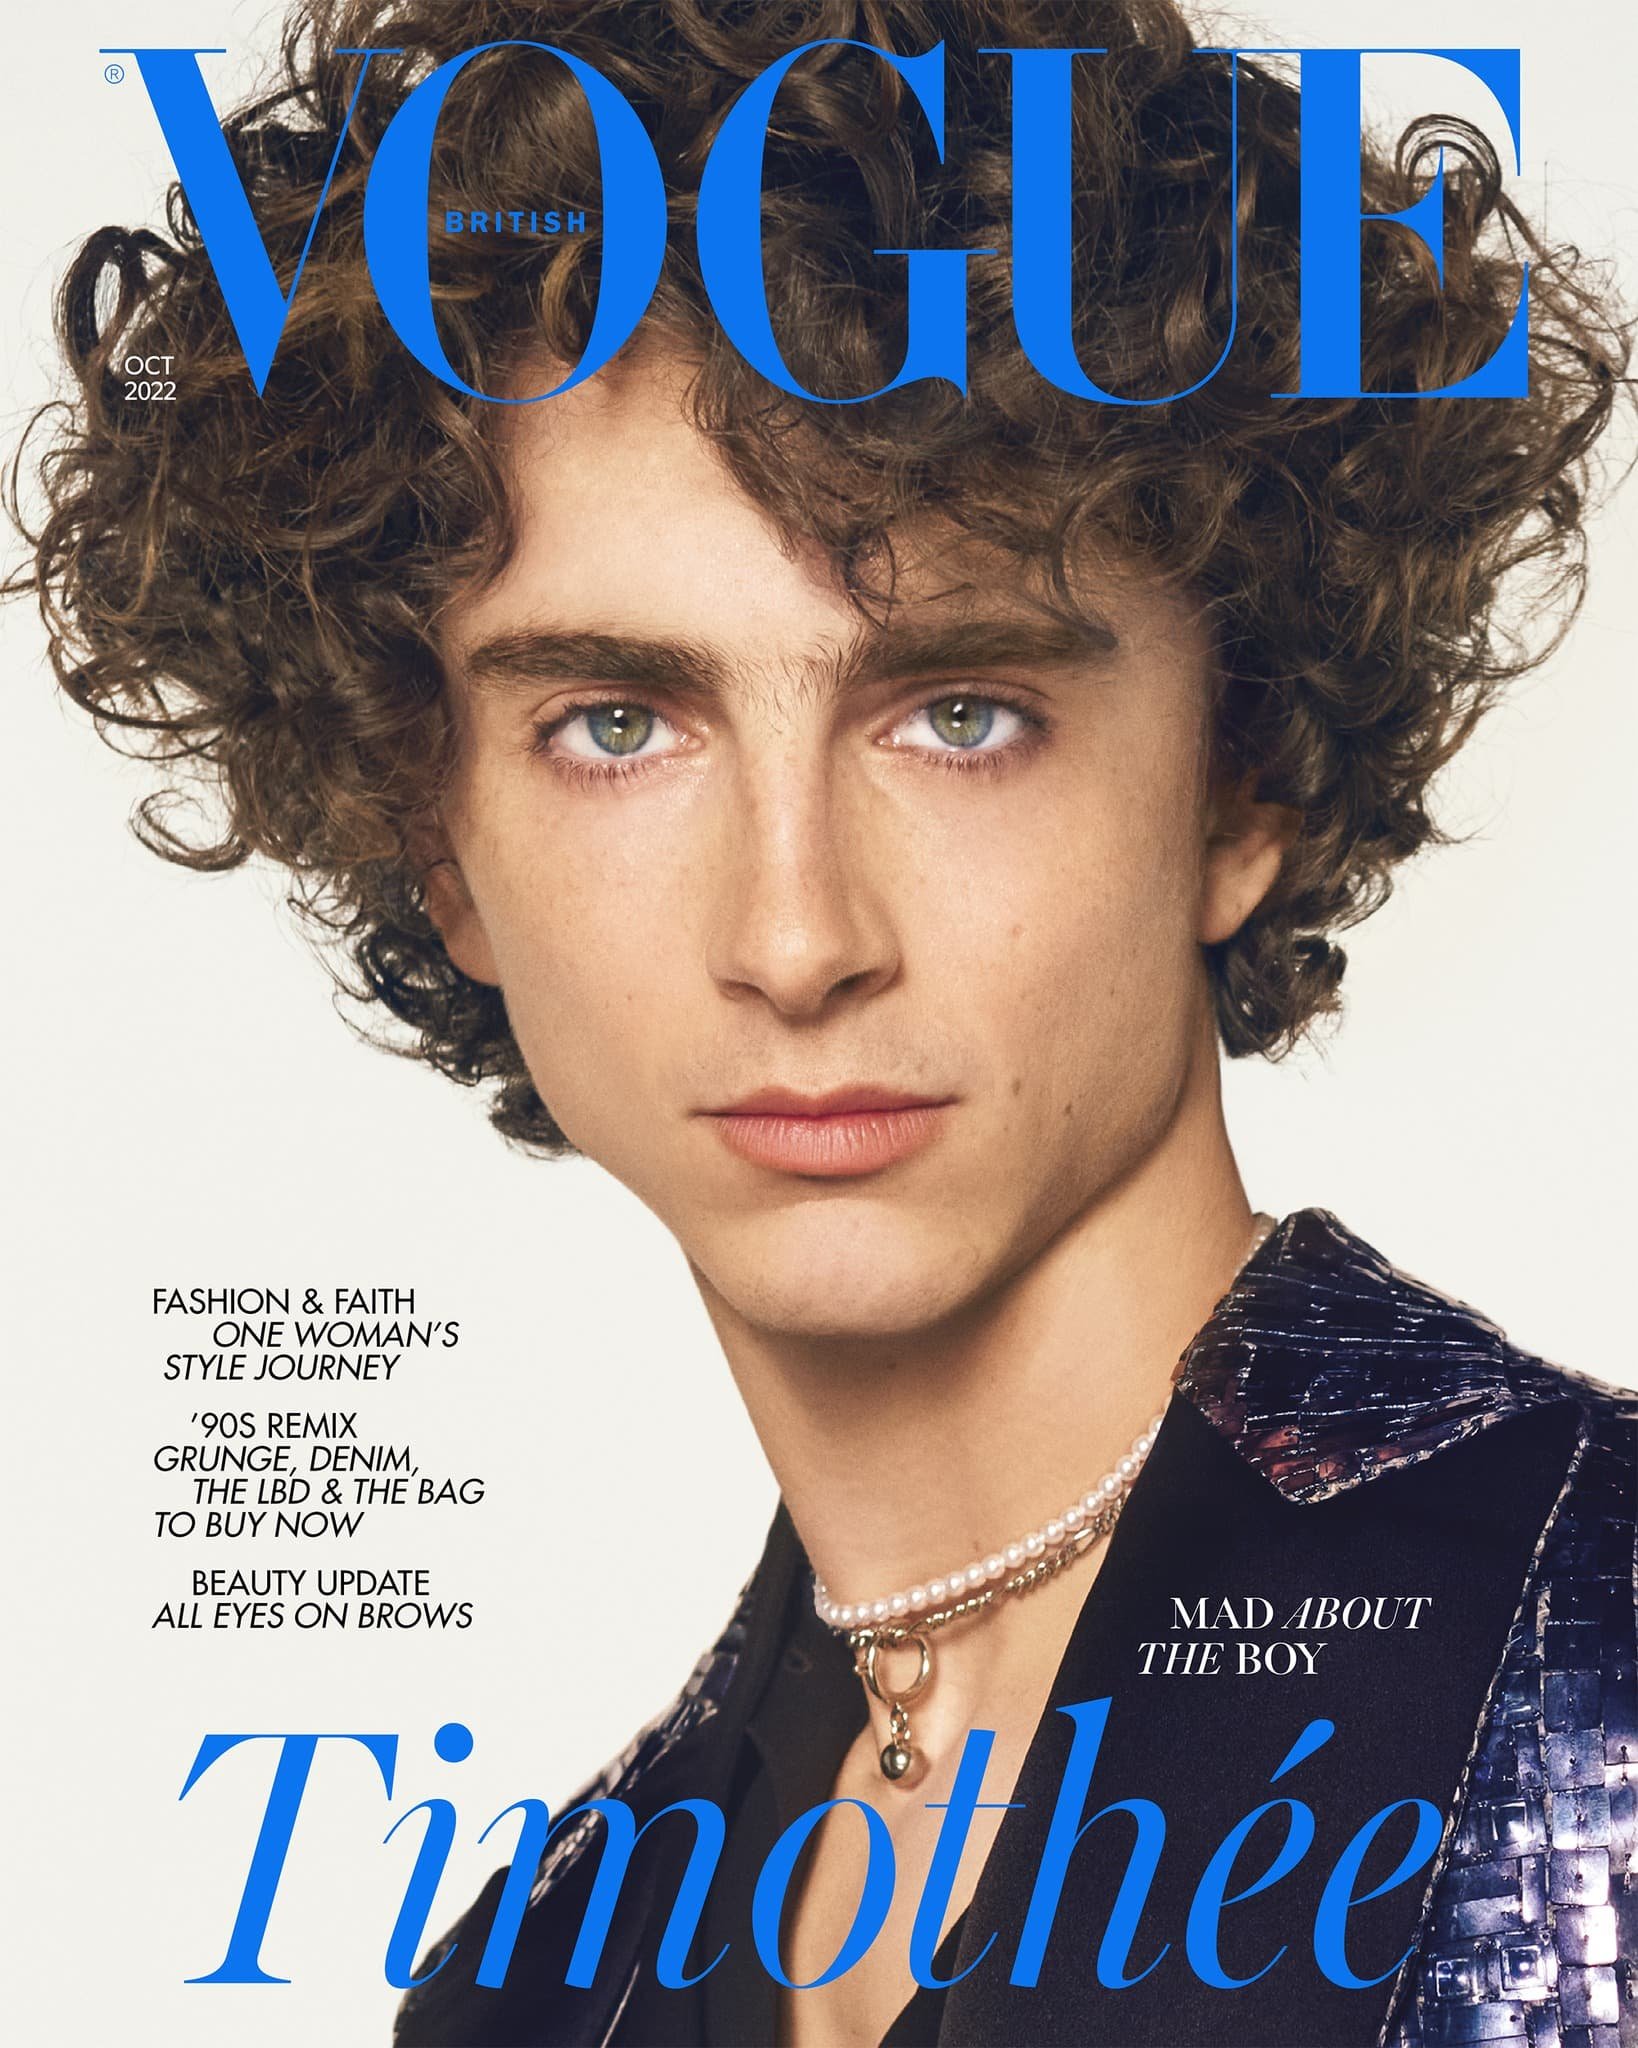 British-Vogue-Cover-October-2022.jpg